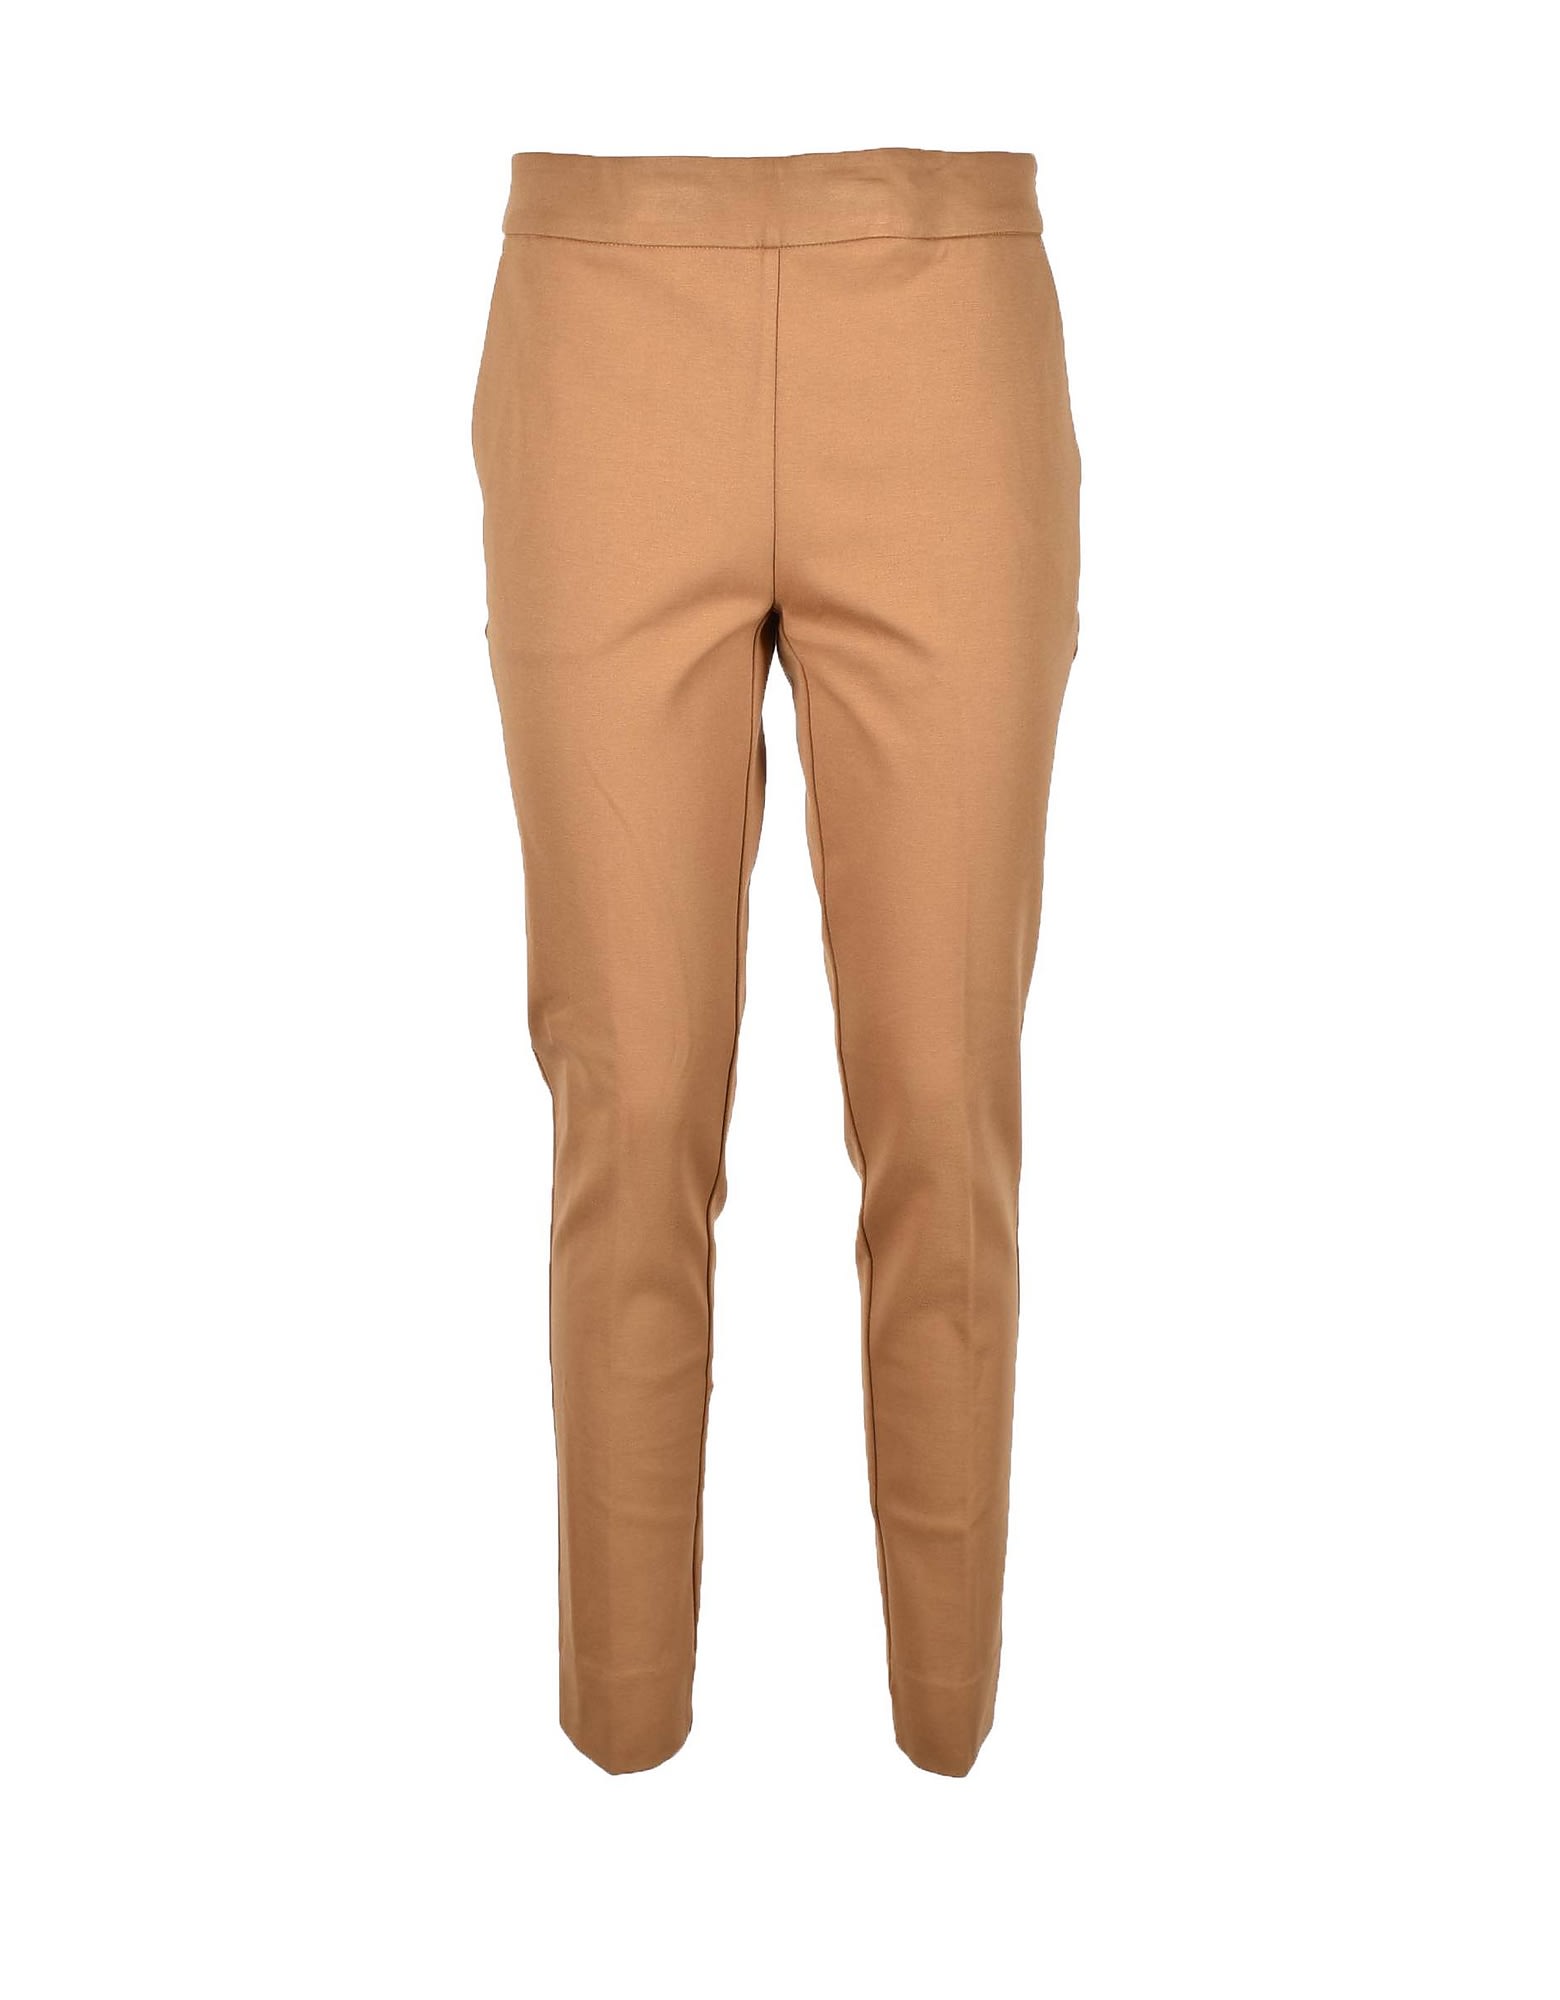 TwinSet Womens Brown Pants